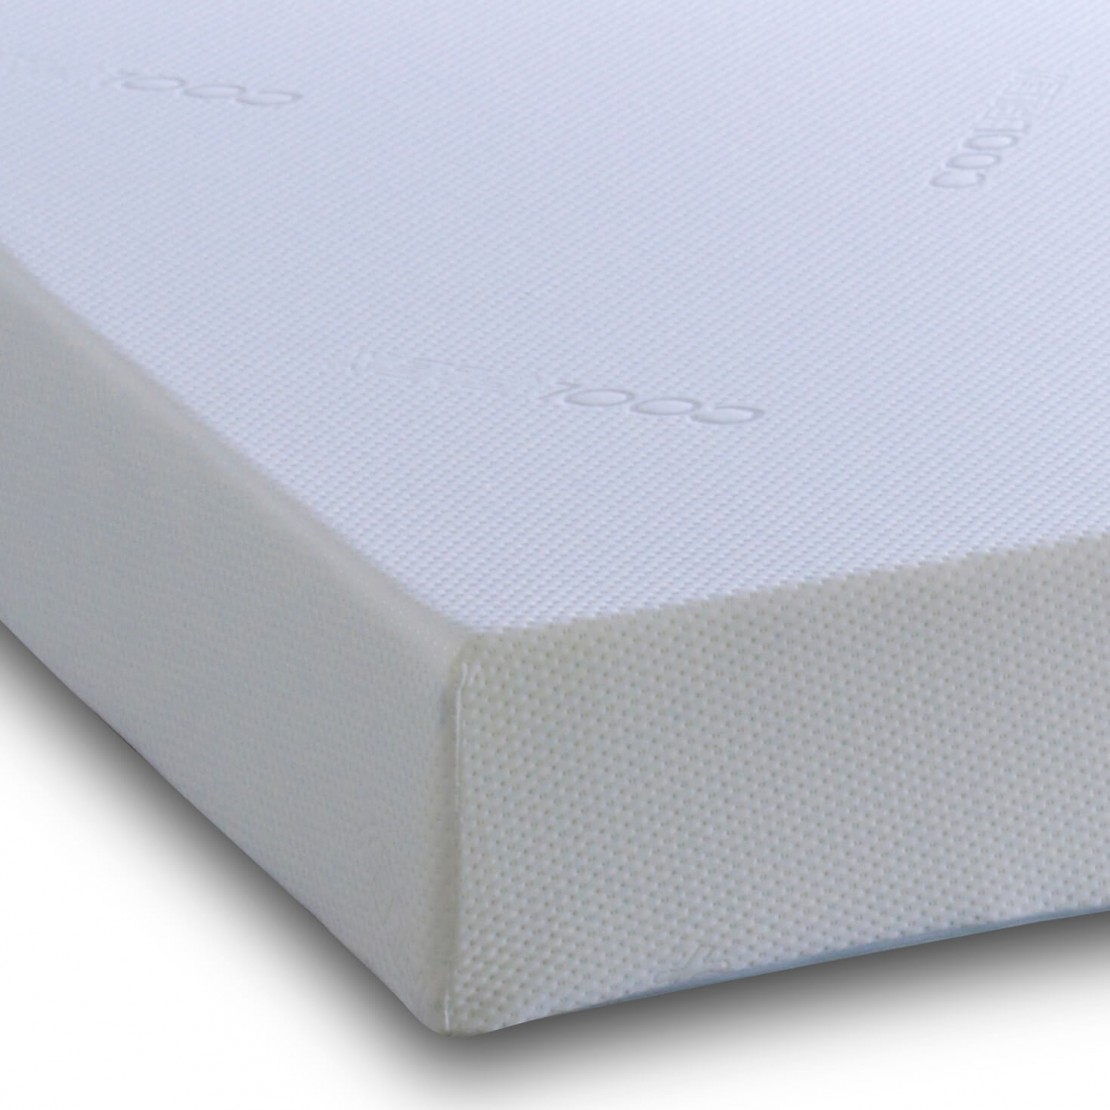 /_images/product-photos/visco-therapy-memory-foam-8000-regular-mattress-a.jpg